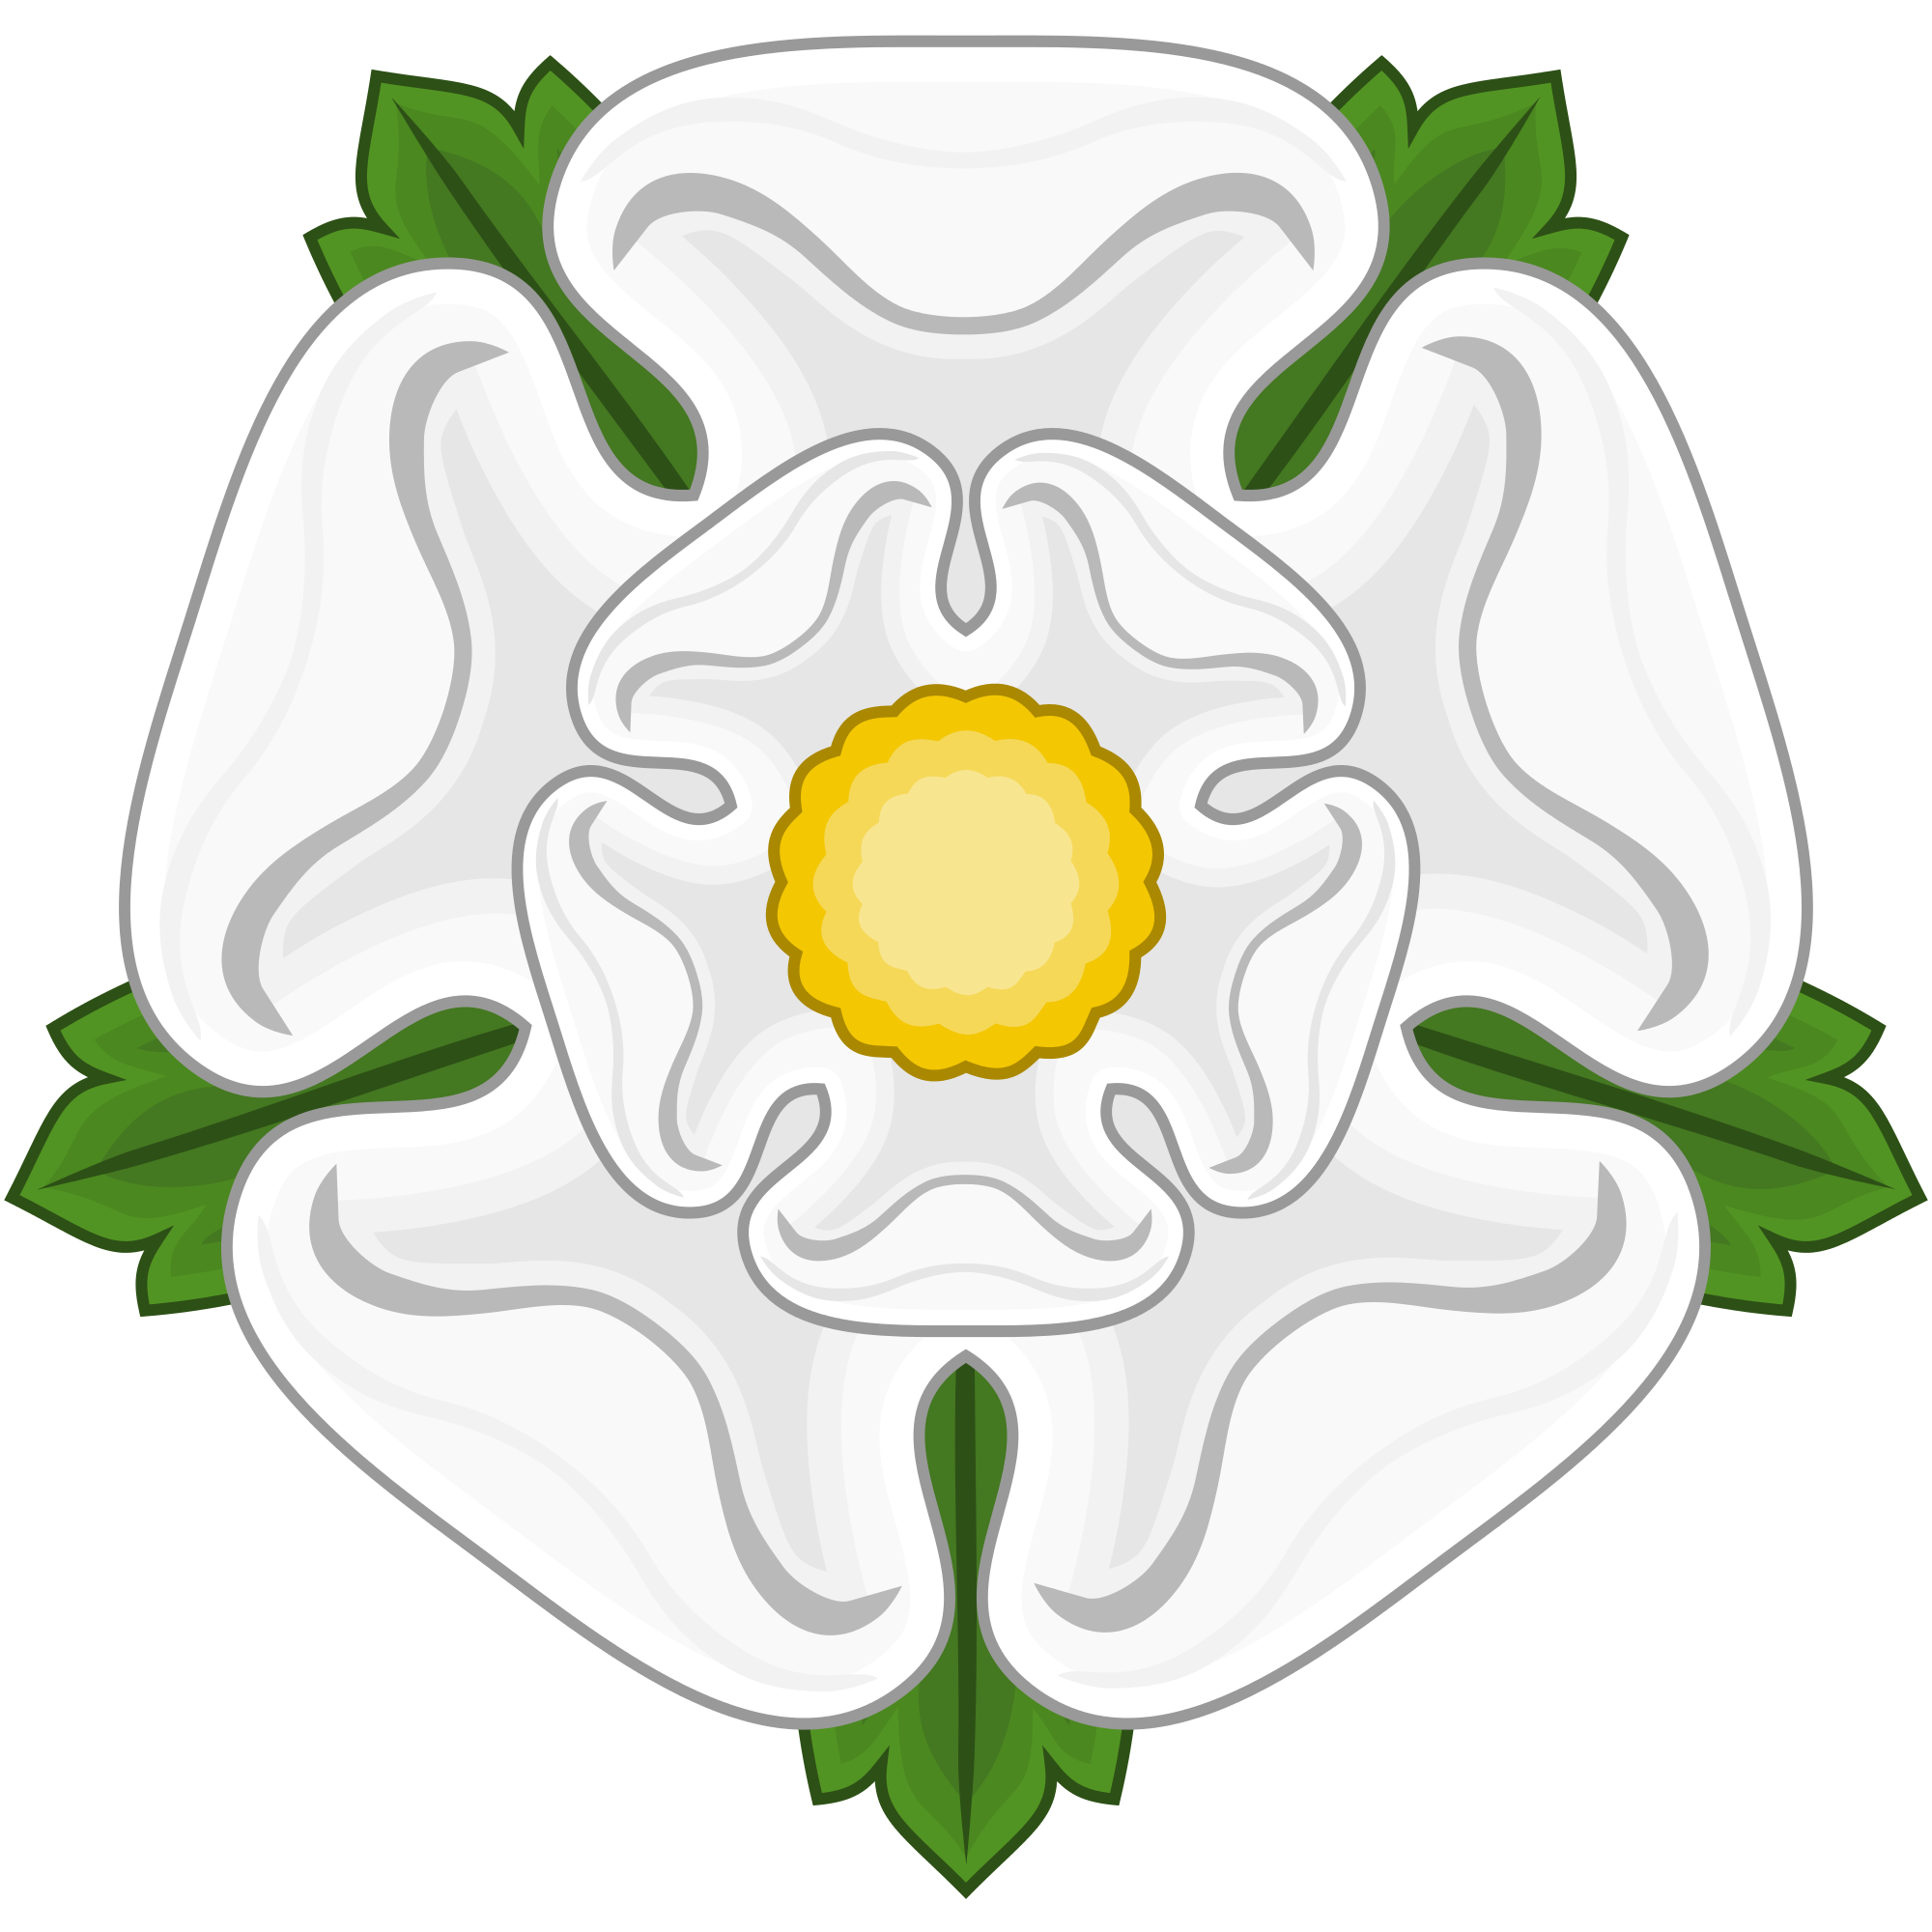 White Rose of York - Wikipedia, the free encyclopedia